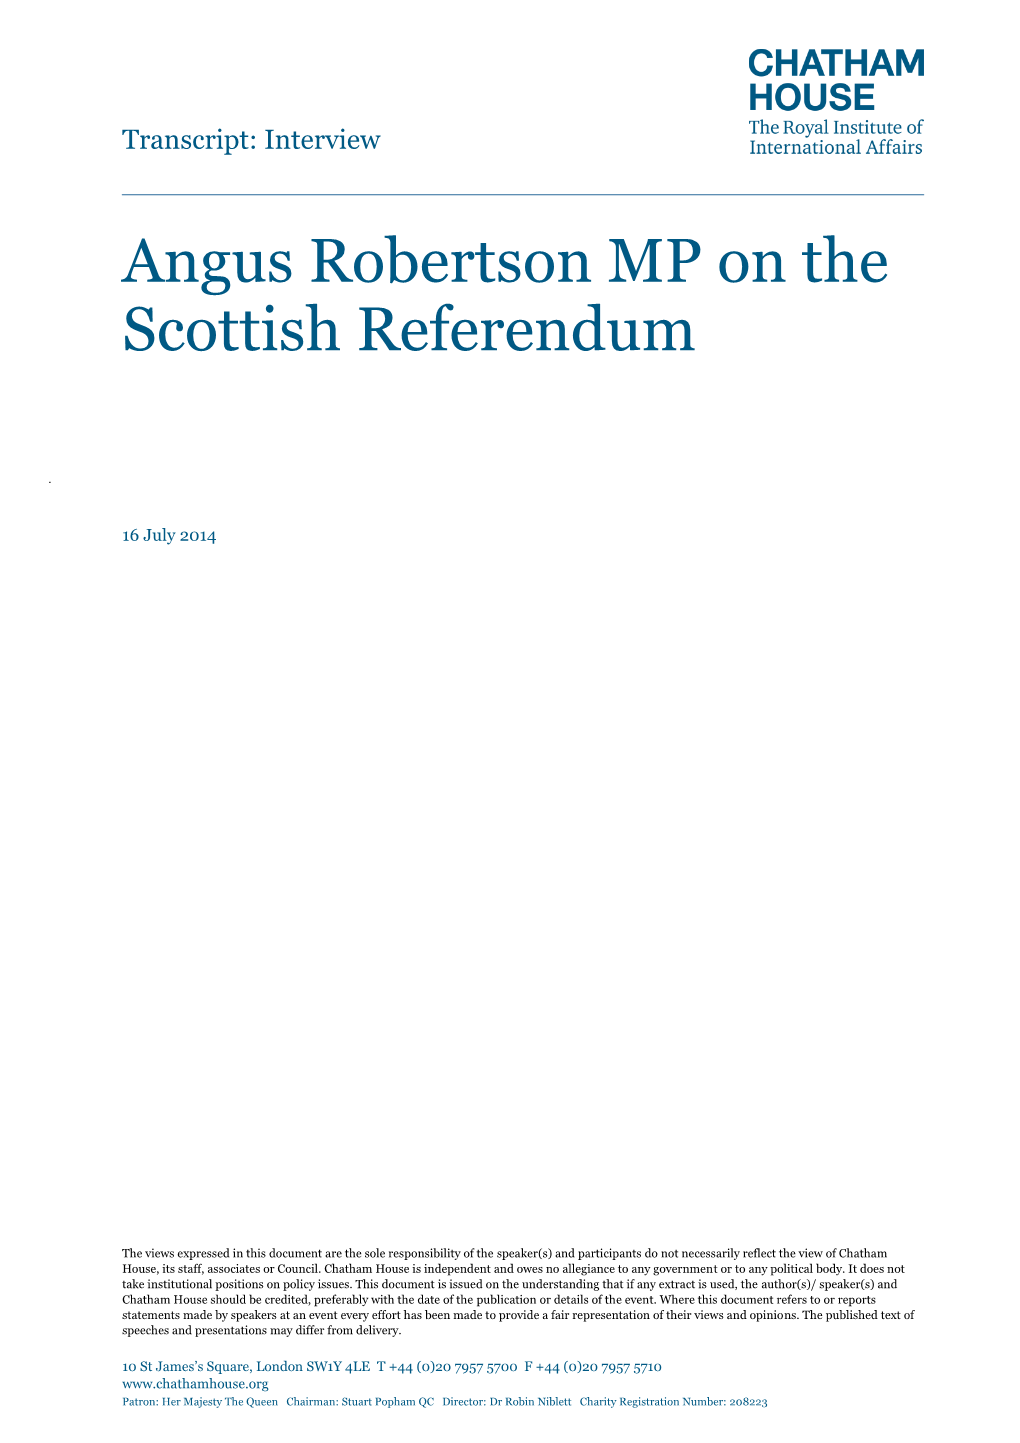 Angus Robertson MP on the Scottish Referendum